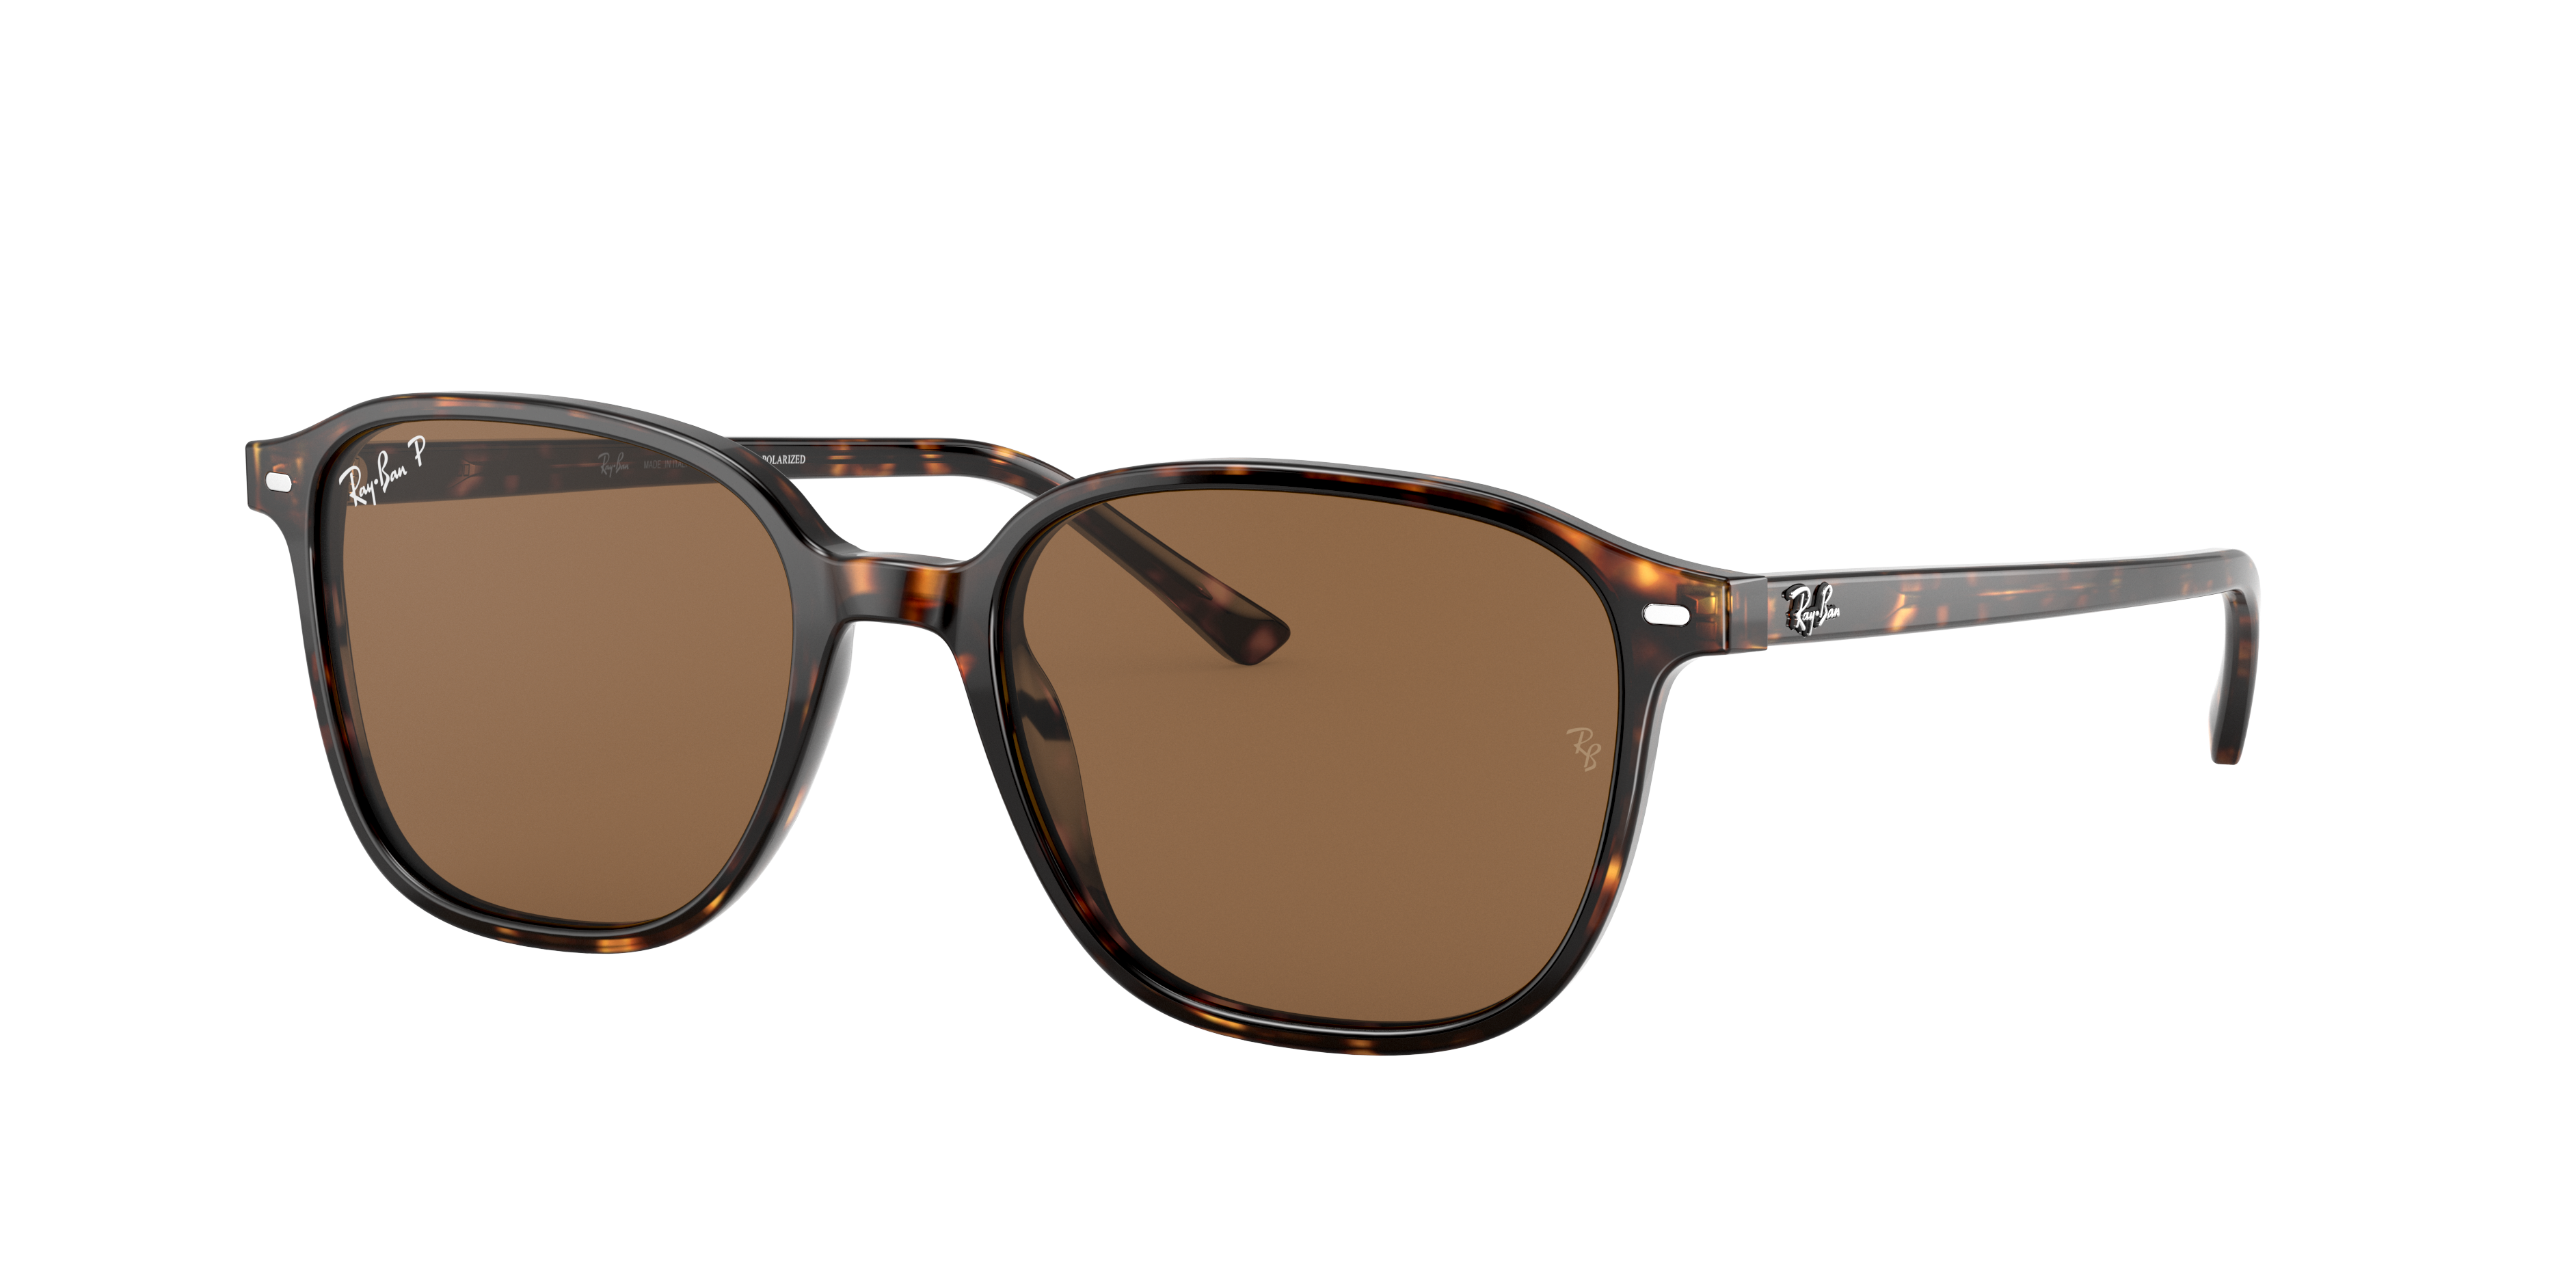 Leonard Sunglasses in Tortoise and Brown | Ray-Ban®